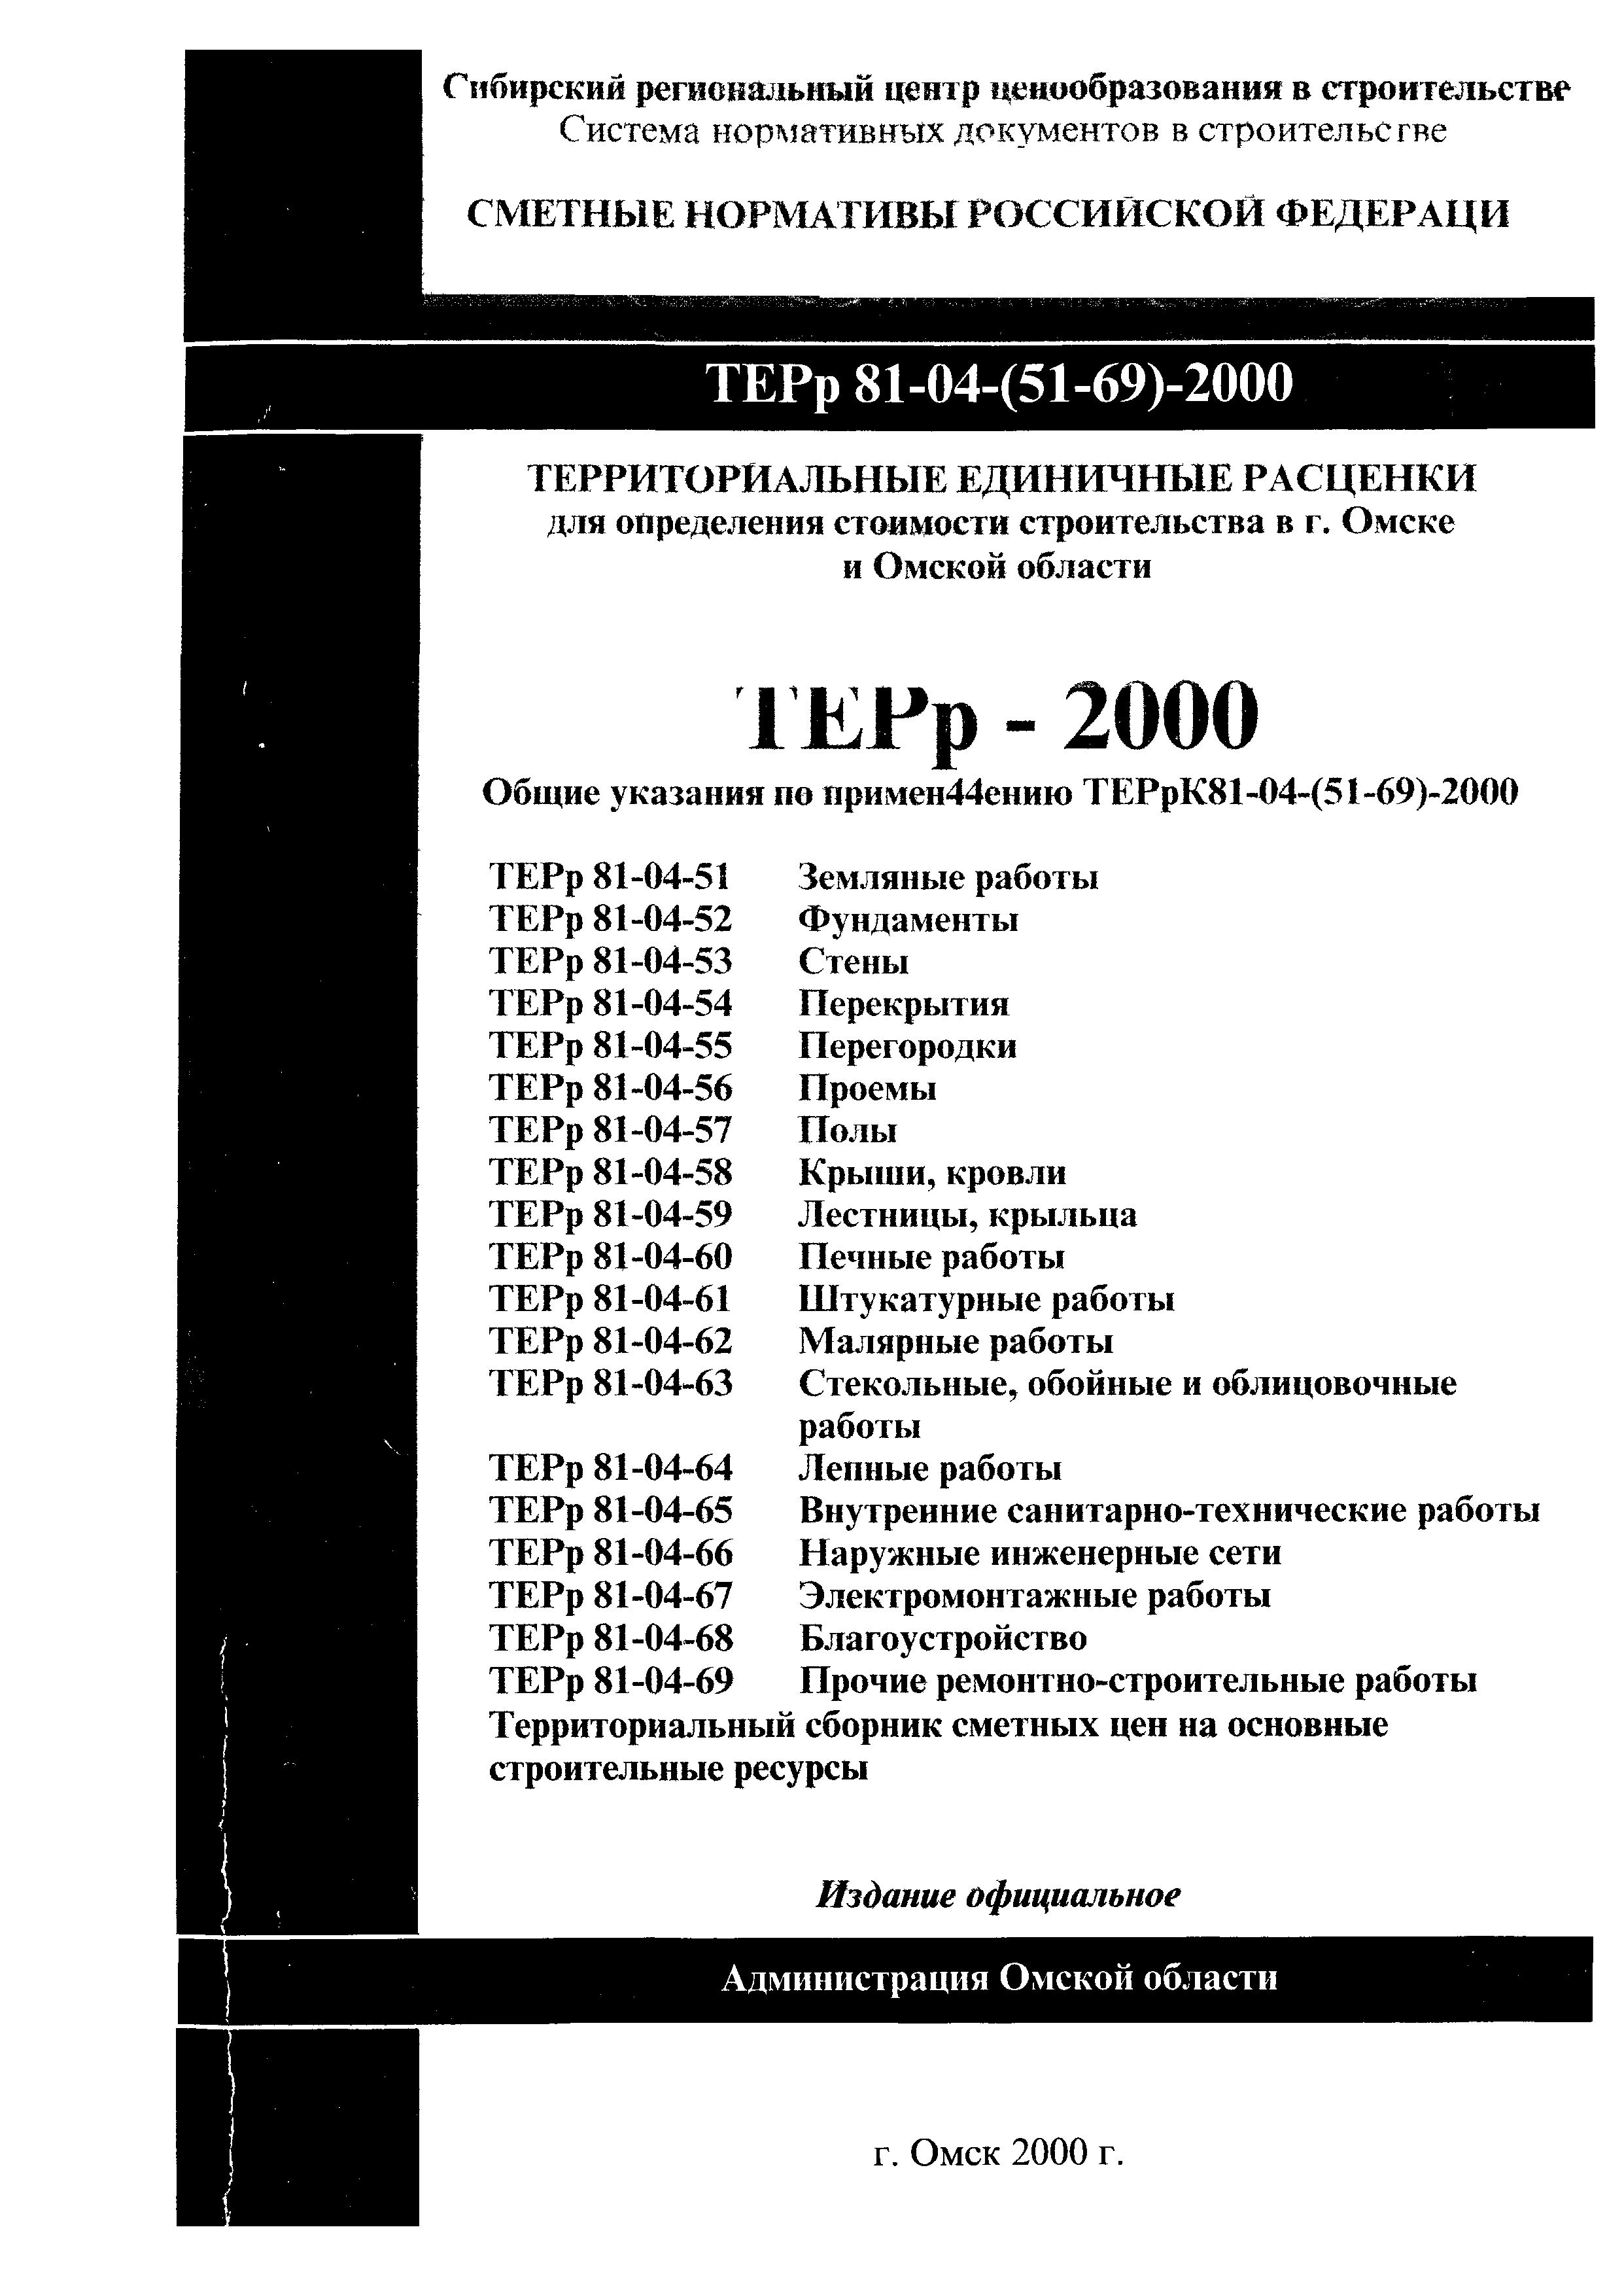 ТЕРр Омской области 2000-60